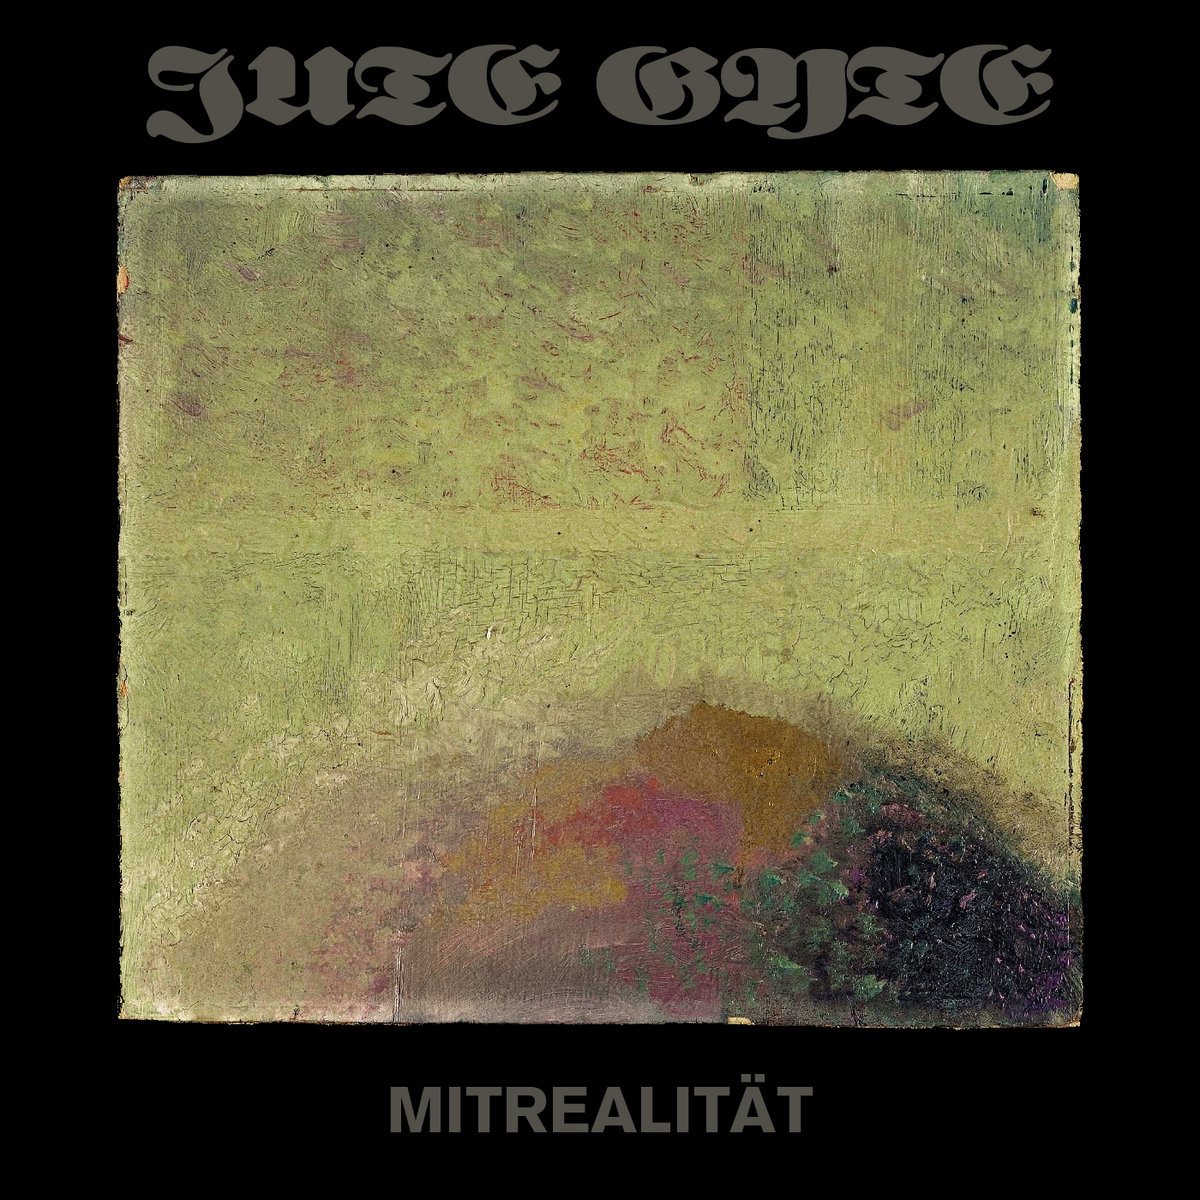 JUTE GYTE - Mitrealität cover 